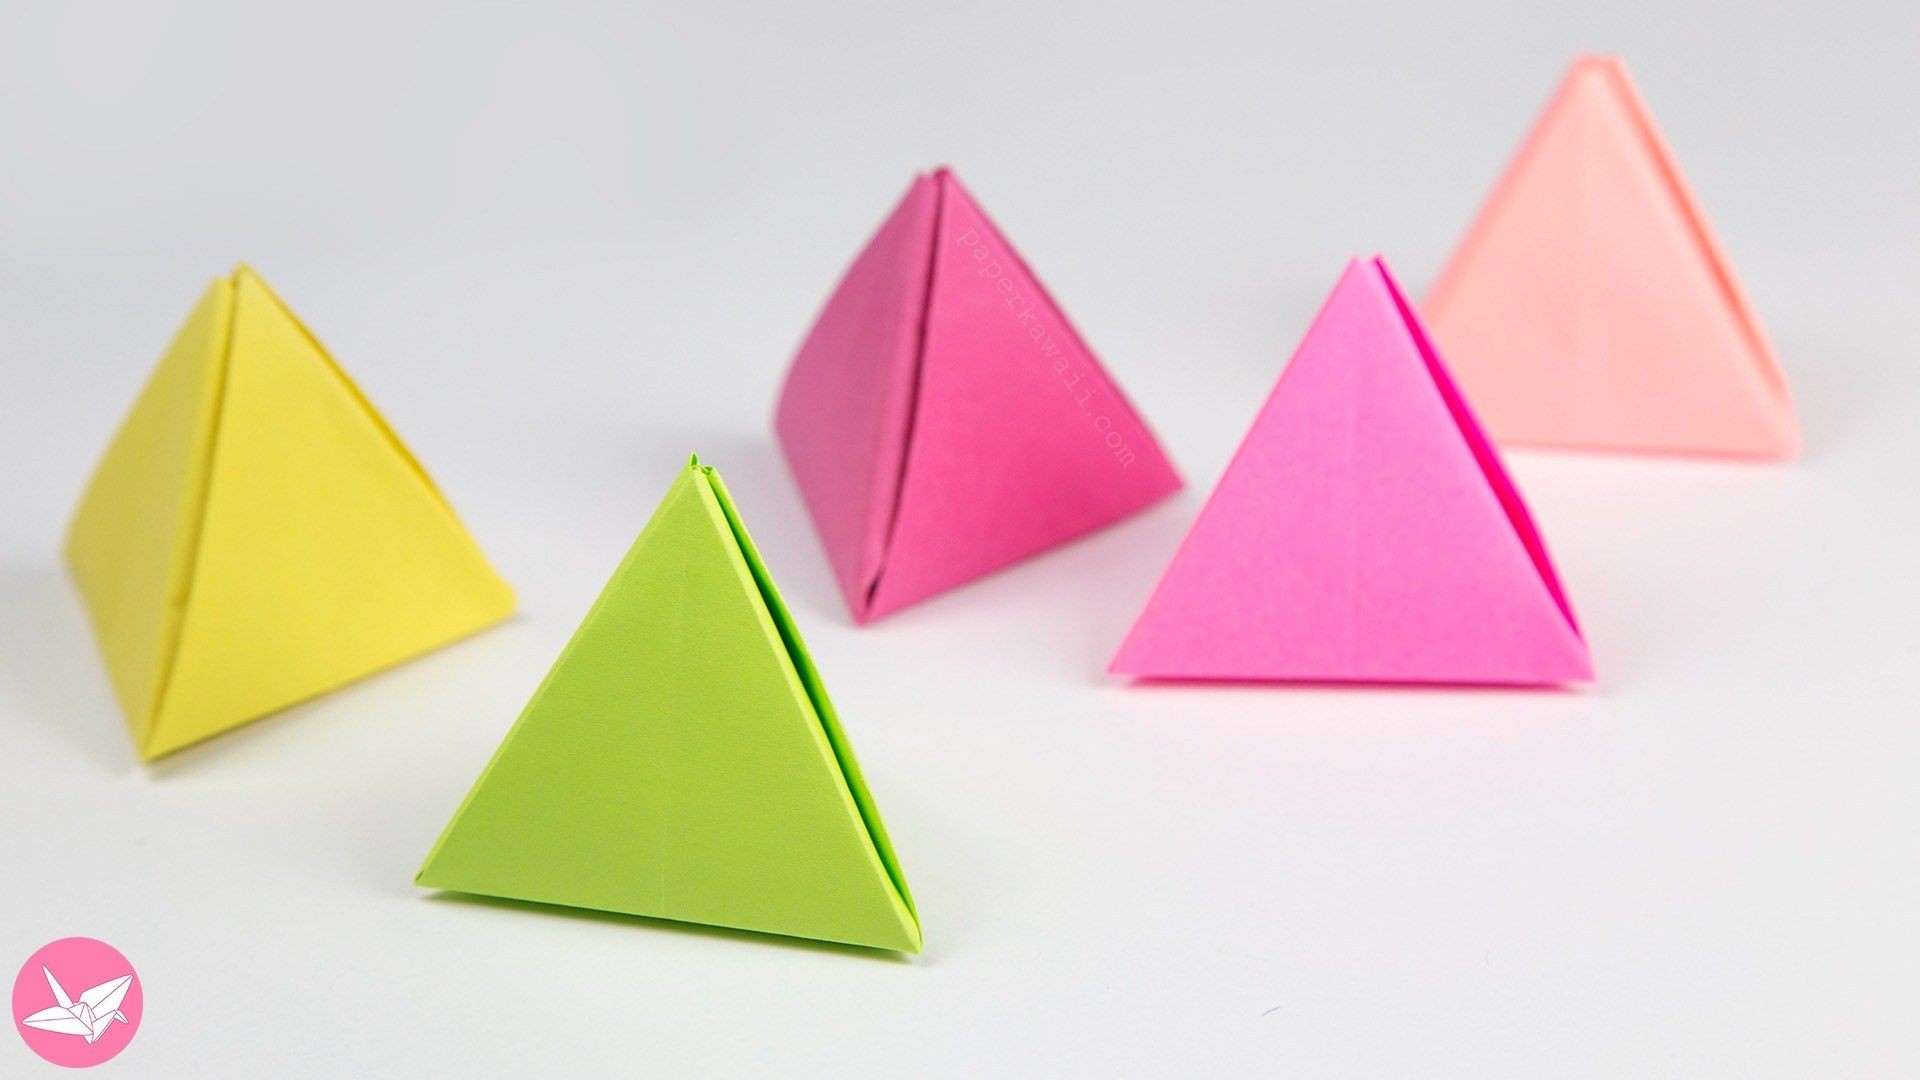 Pyramid Papercraft origami Pyramid Gift Box Pot or Decoration Tutorial